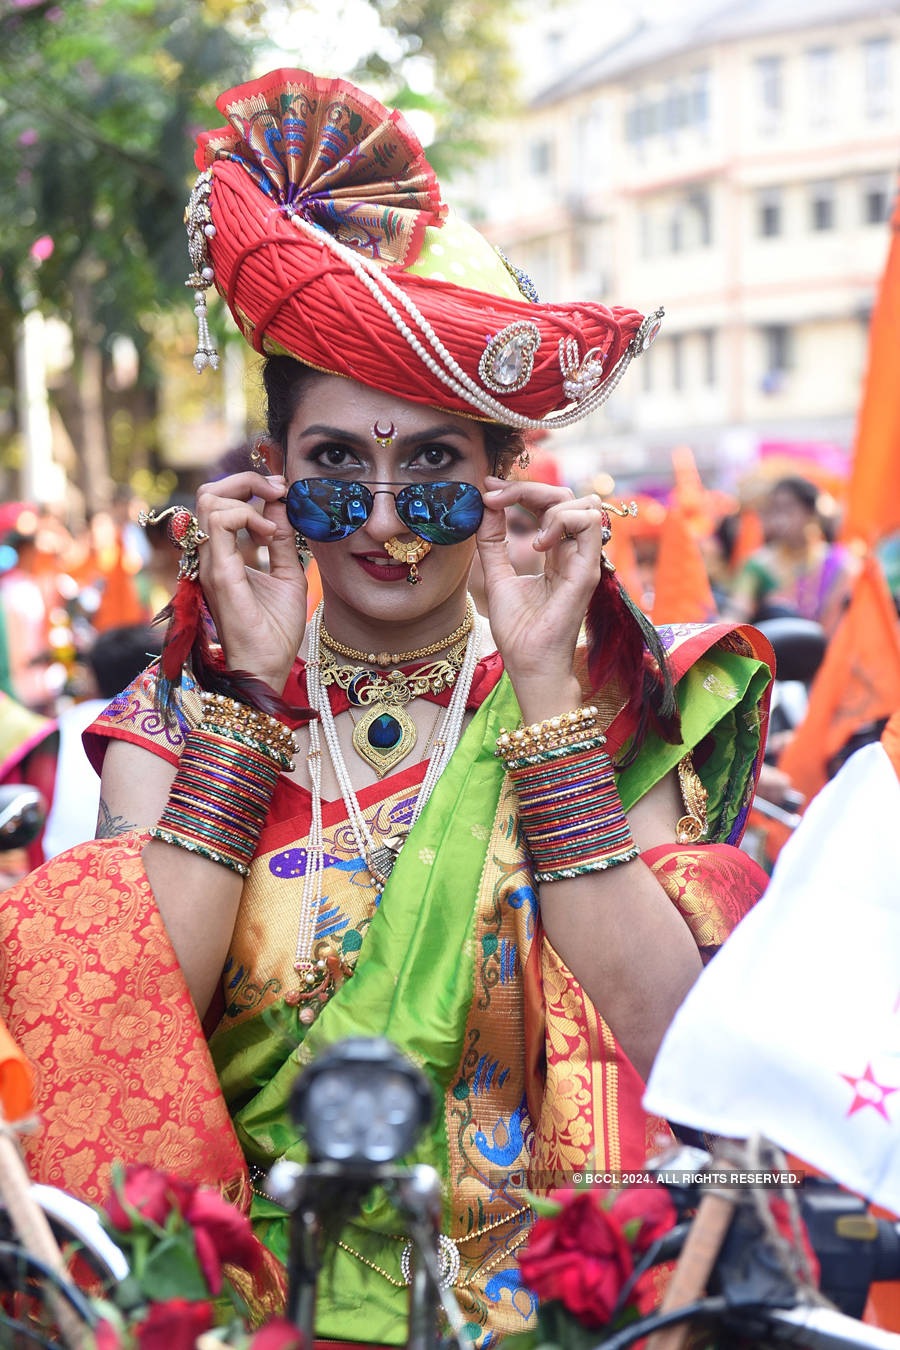 Marathis celebrate Gudi Padwa with pomp and show